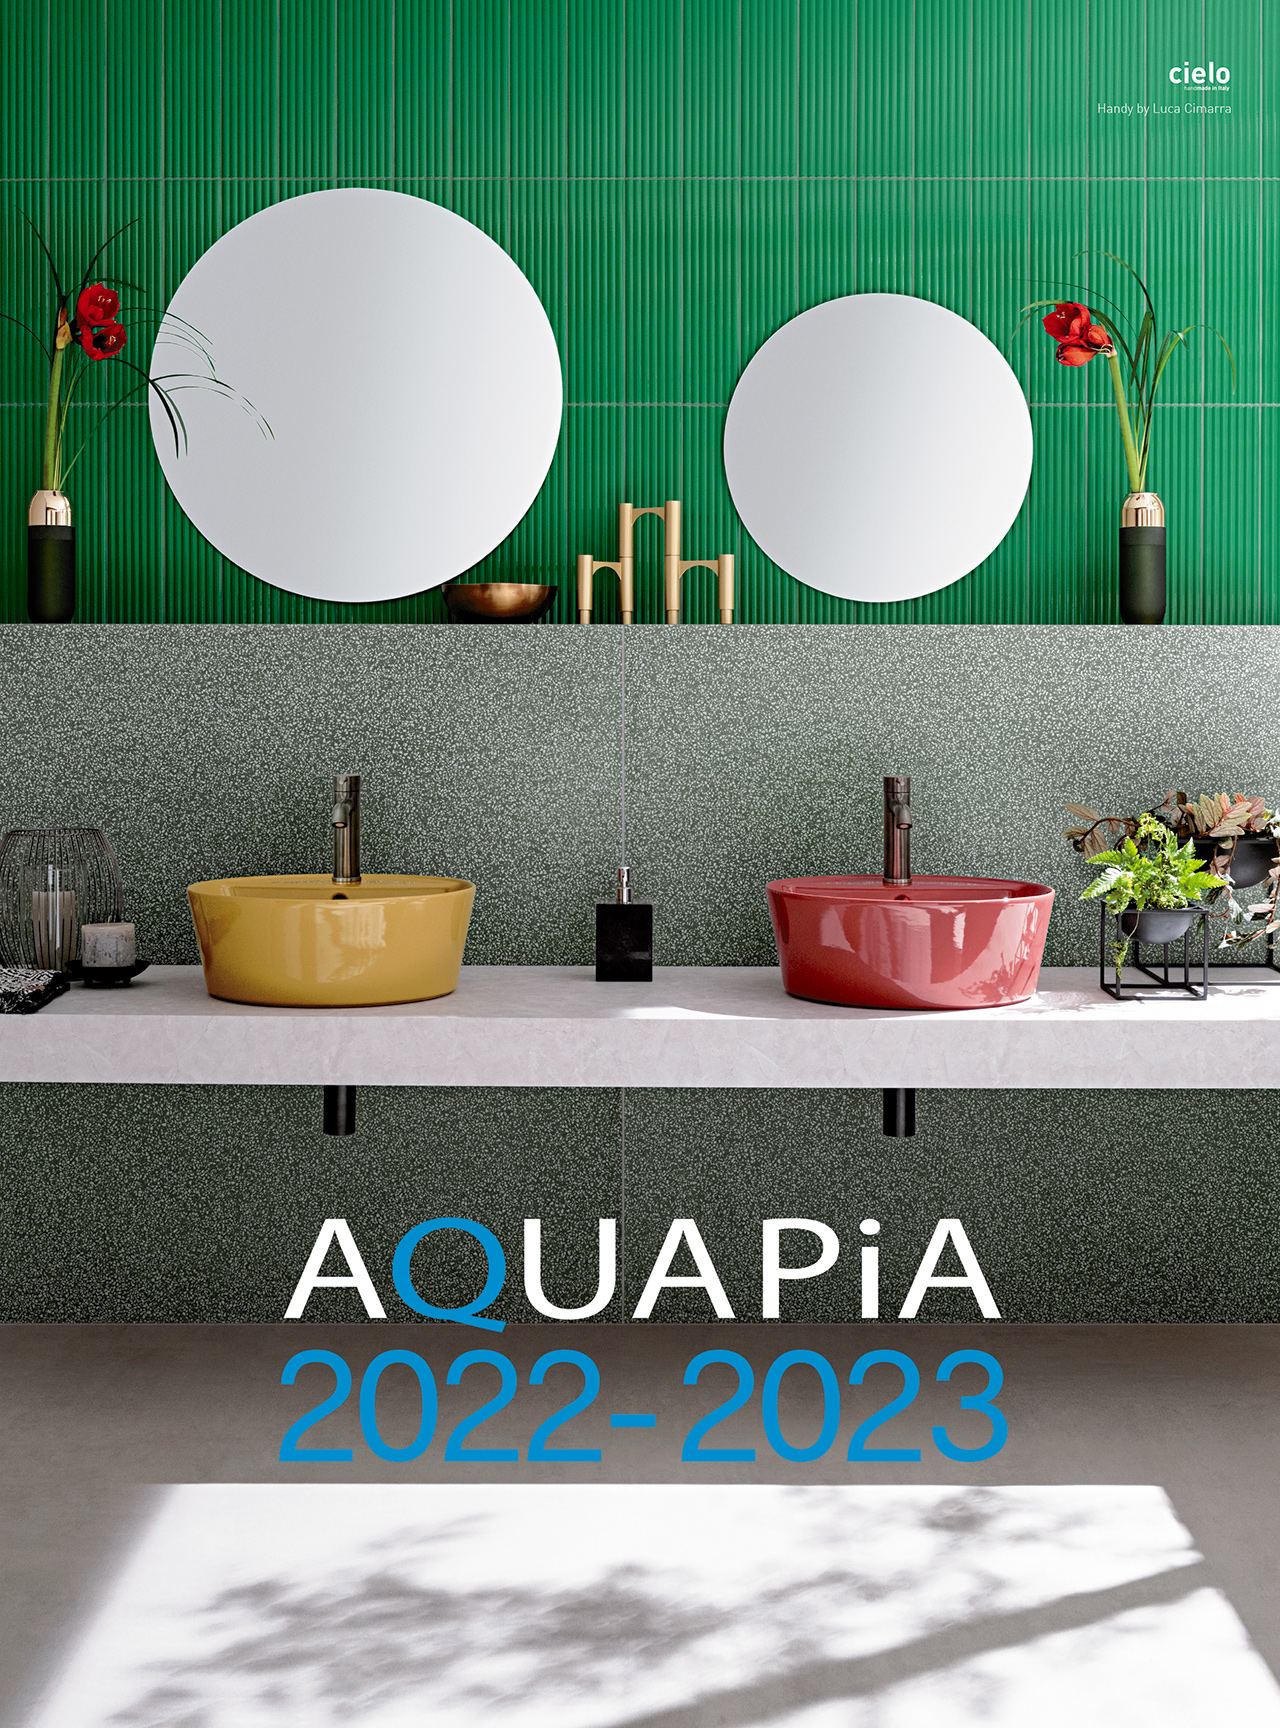 AQUAPiAカタログ2021-2022 revised edition